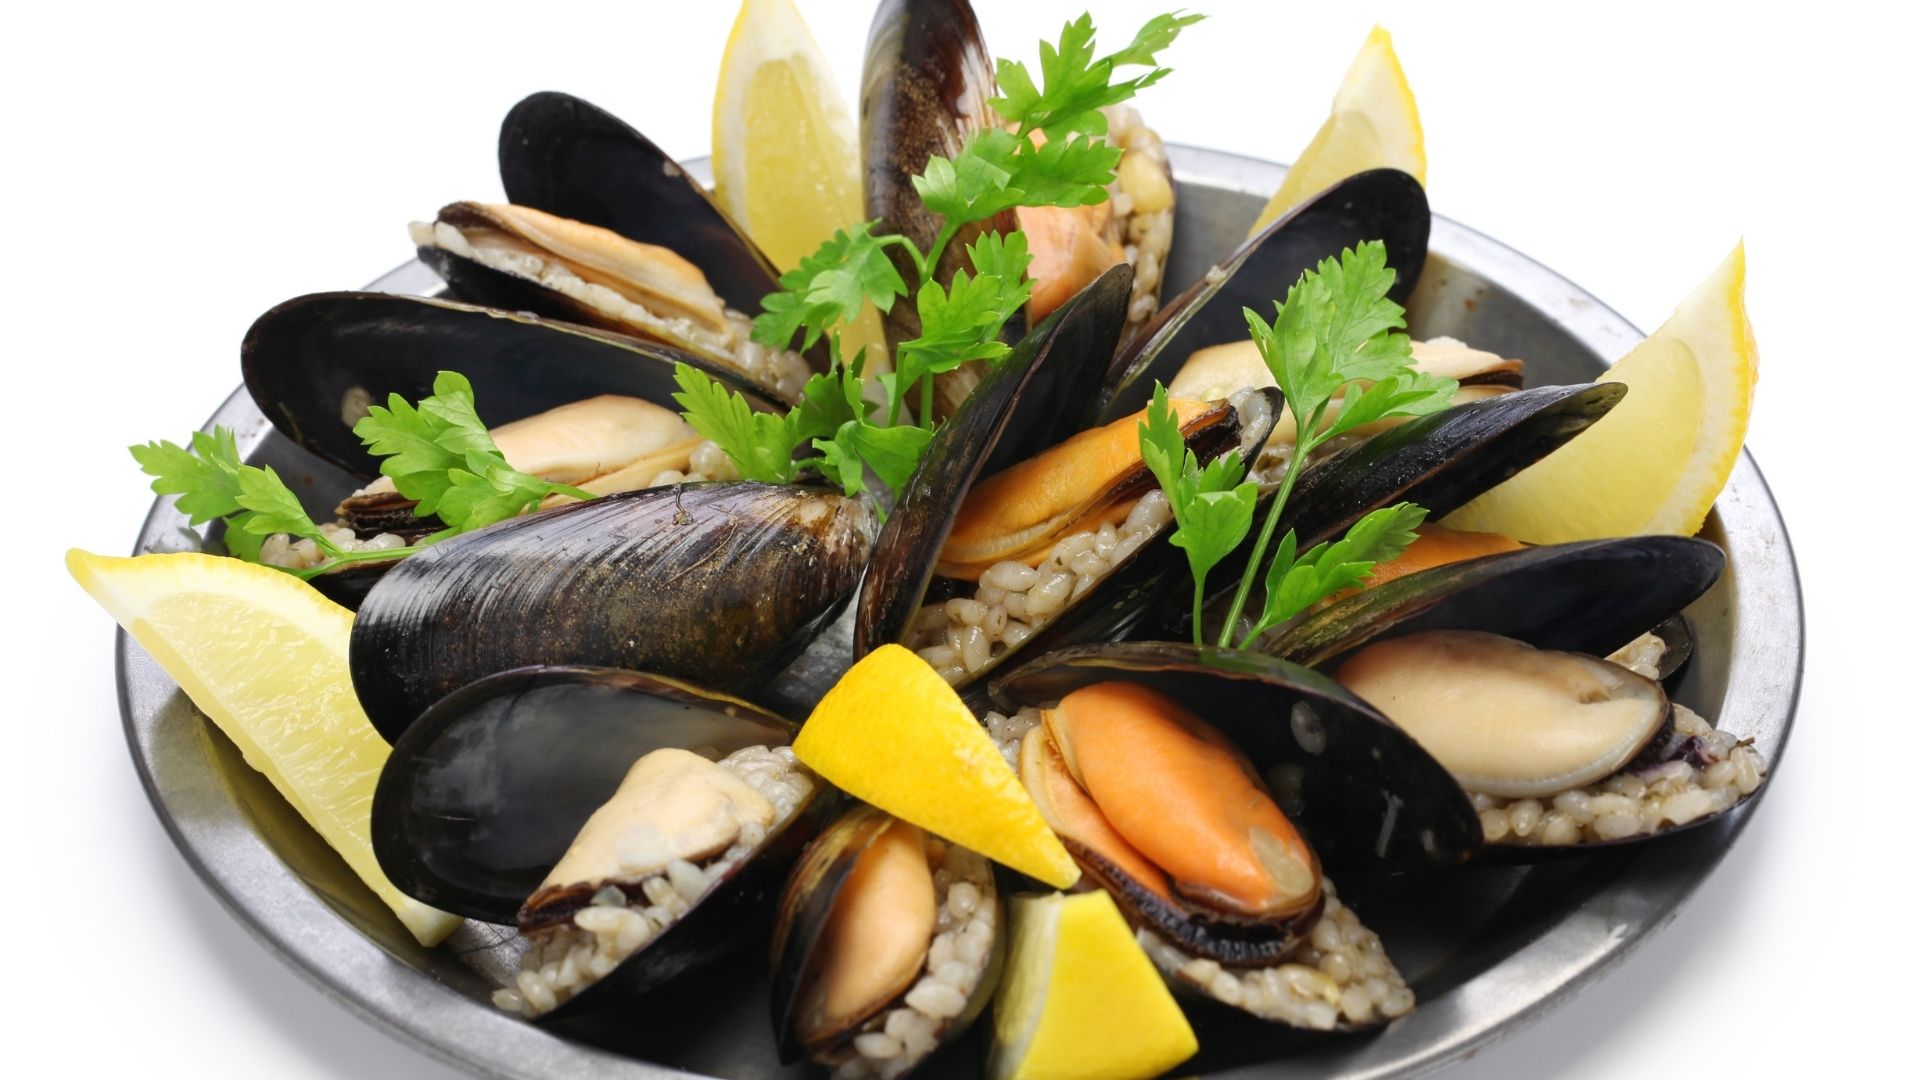 stuffed mussels on plate